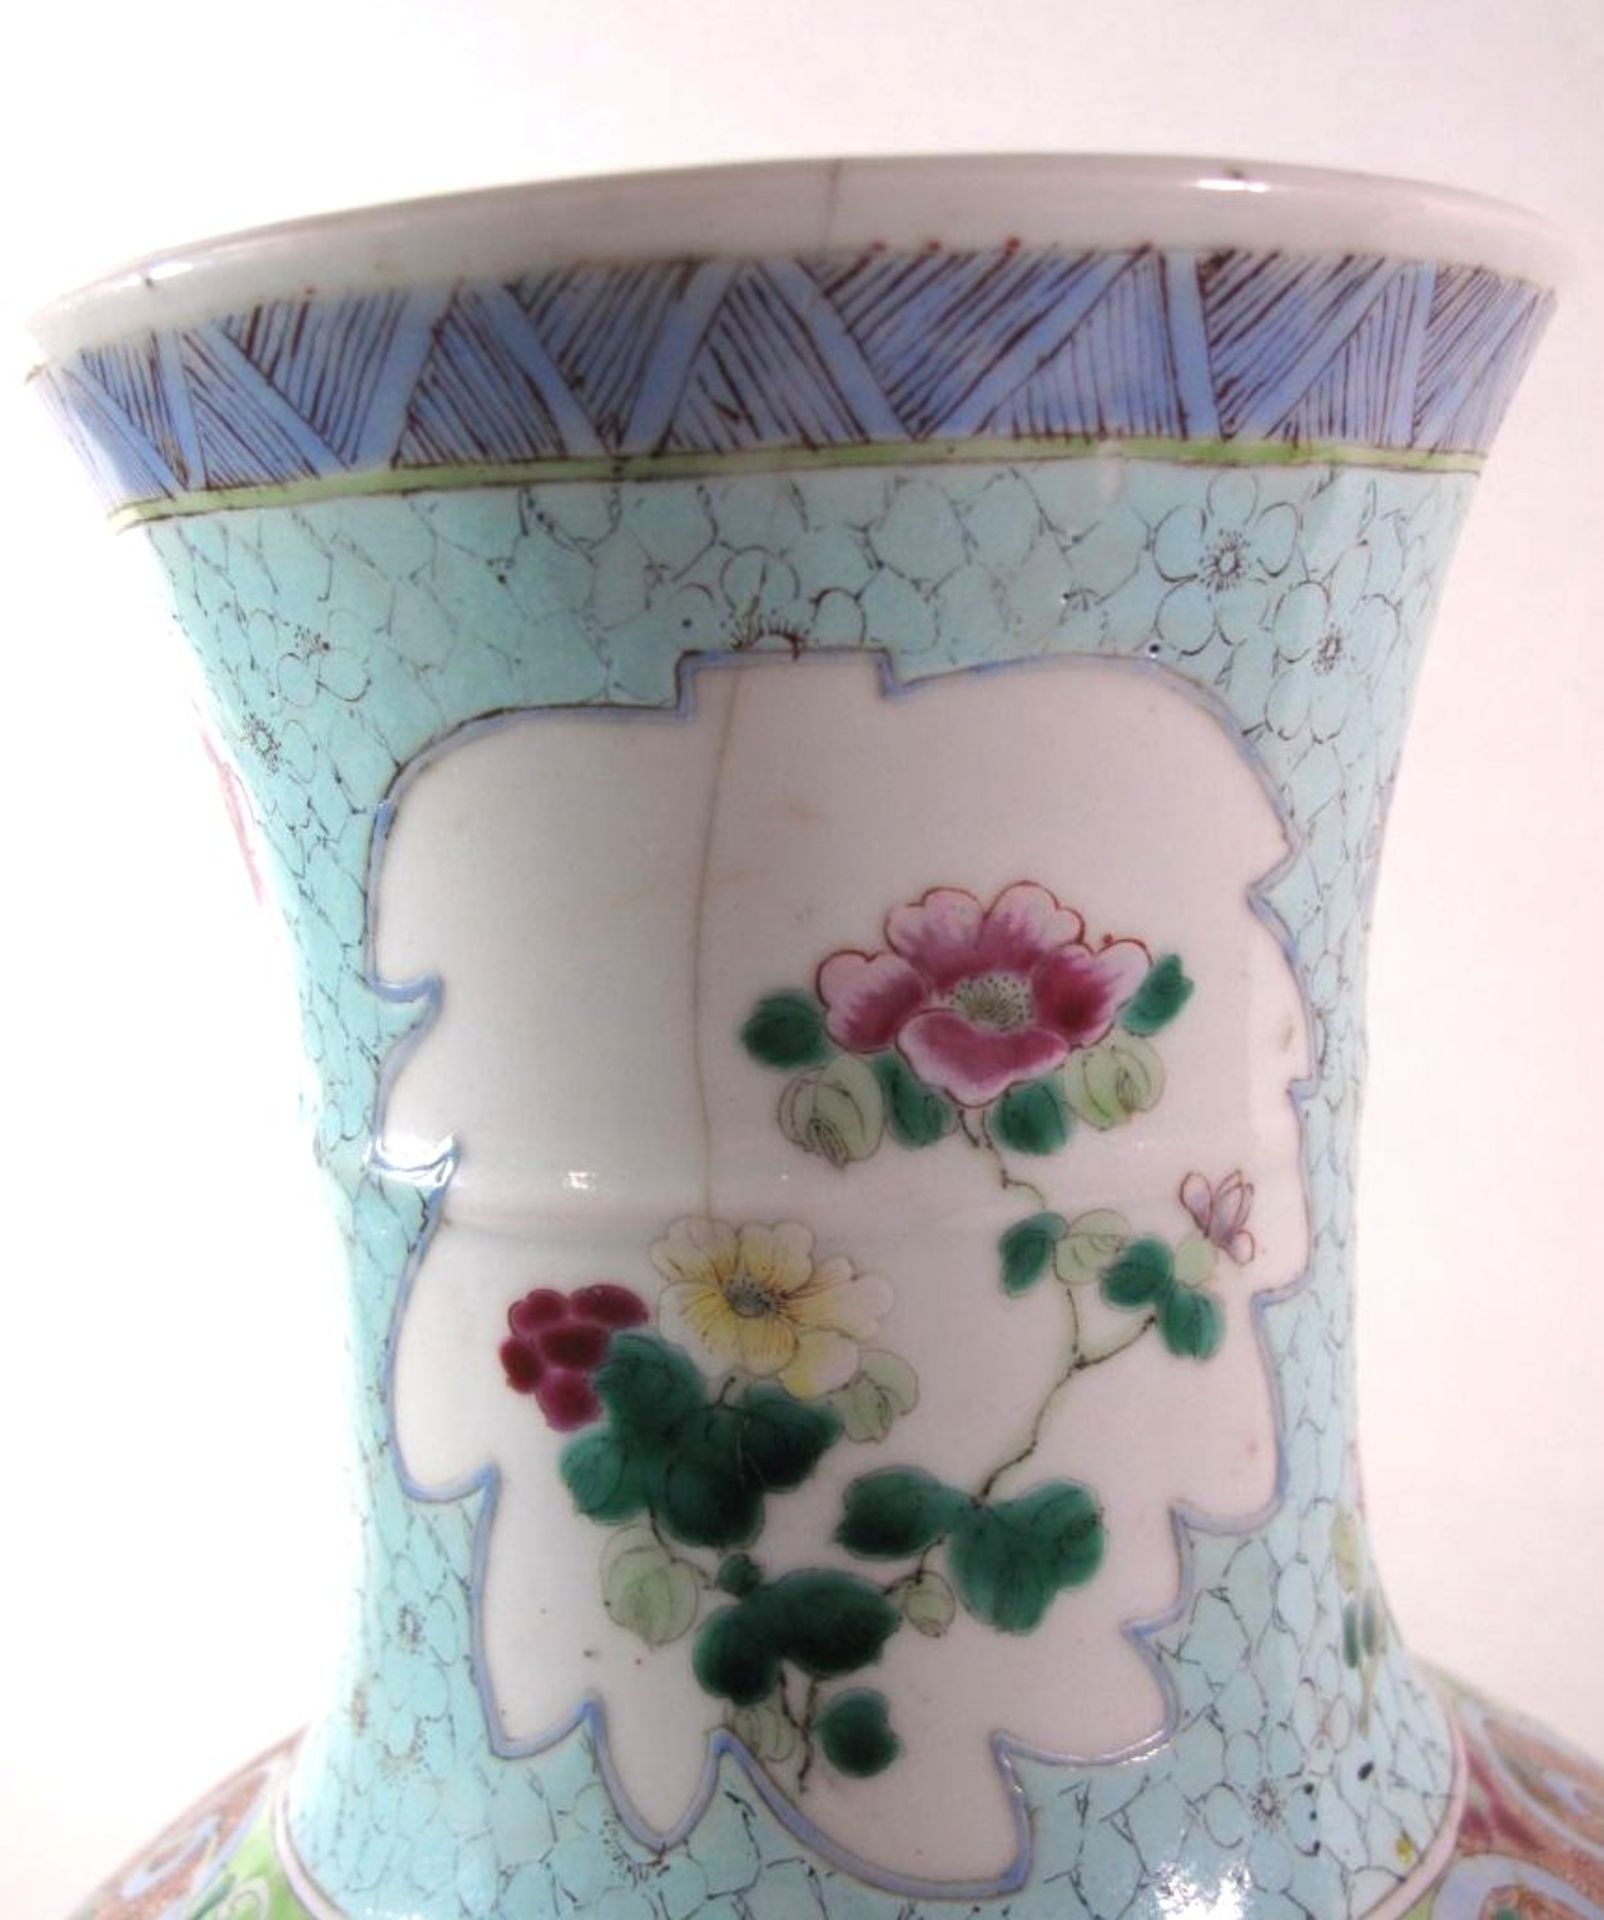 hohe Vase, China, aufwendig dekoriert, Kirschblüten, wohl Anf. 19. Jhd., Altris am Vasenhals, - Bild 7 aus 9